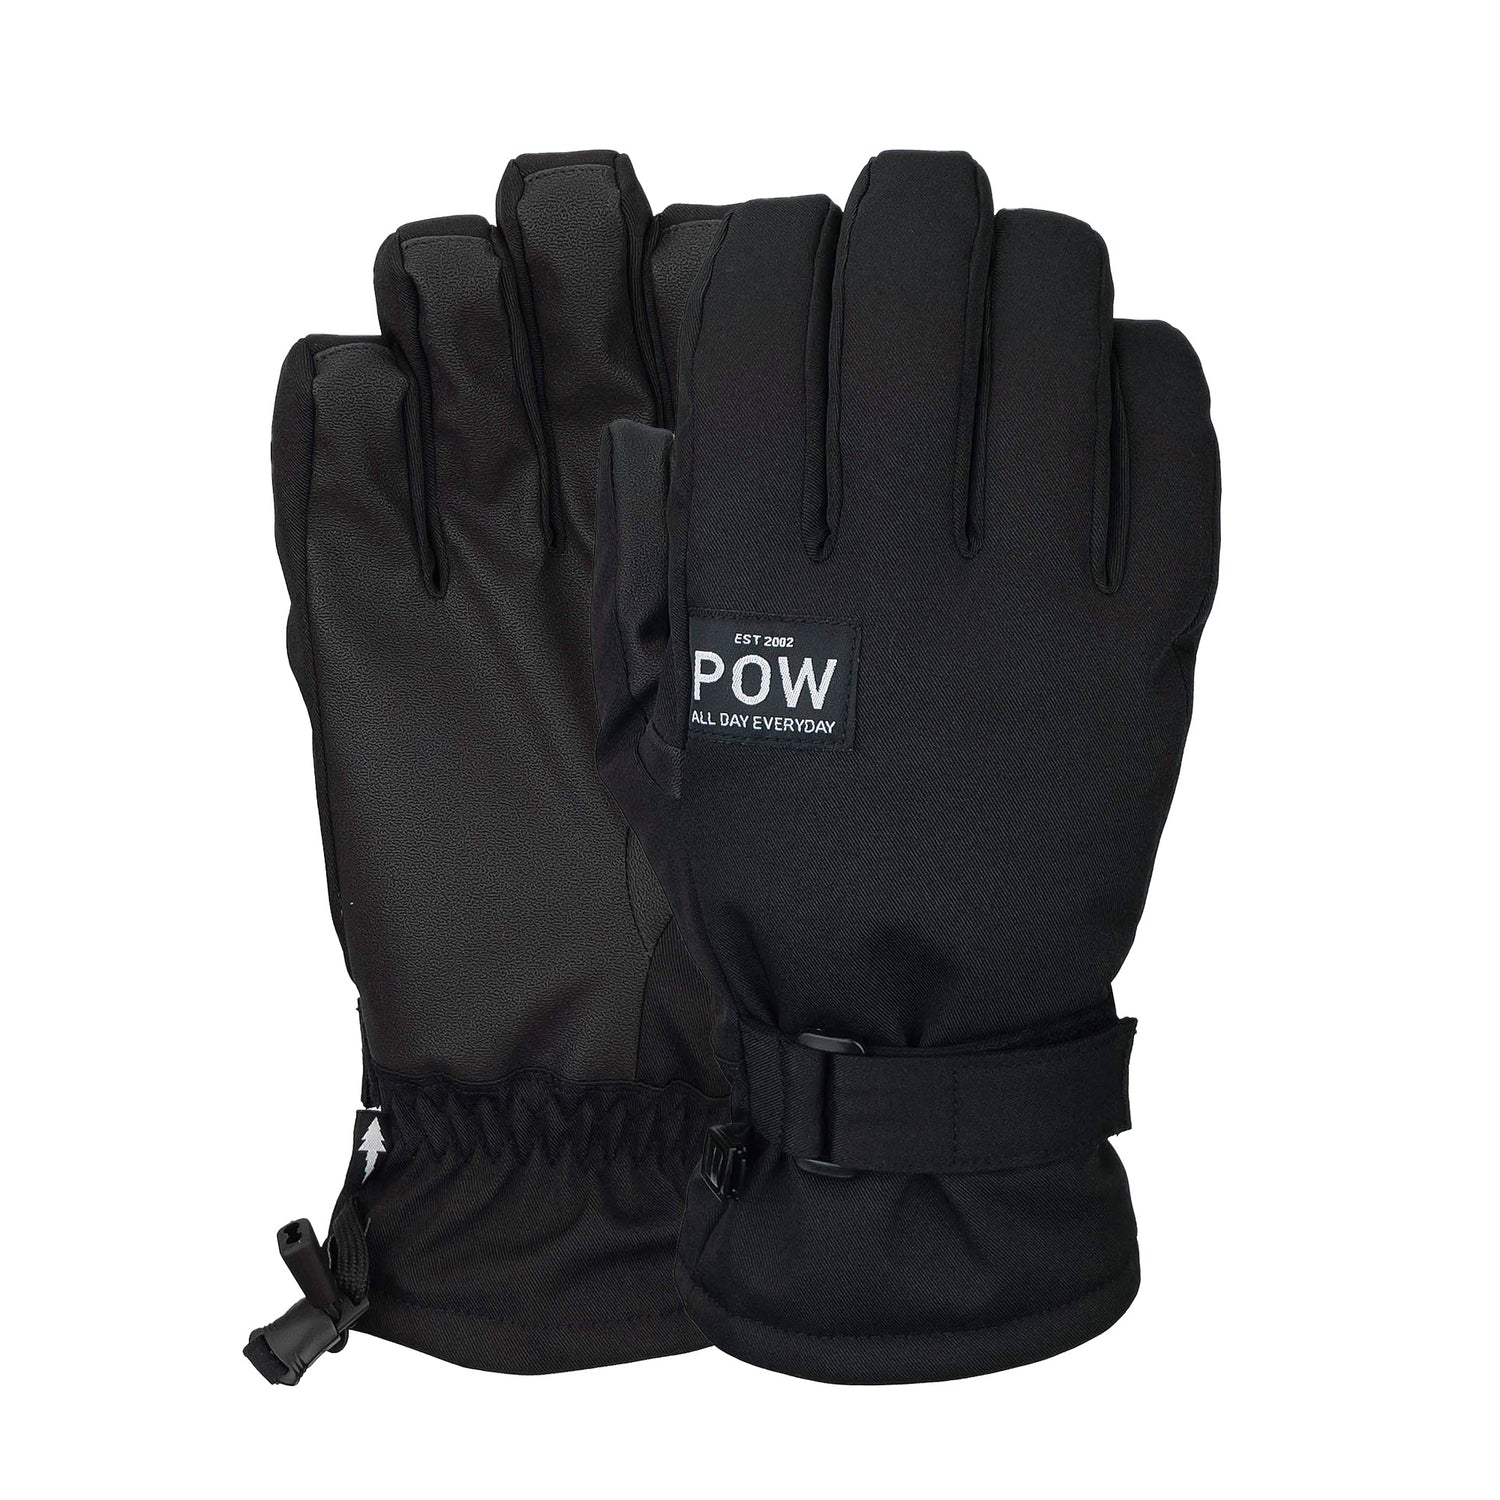 POW XG MID Glove Unisex - Black